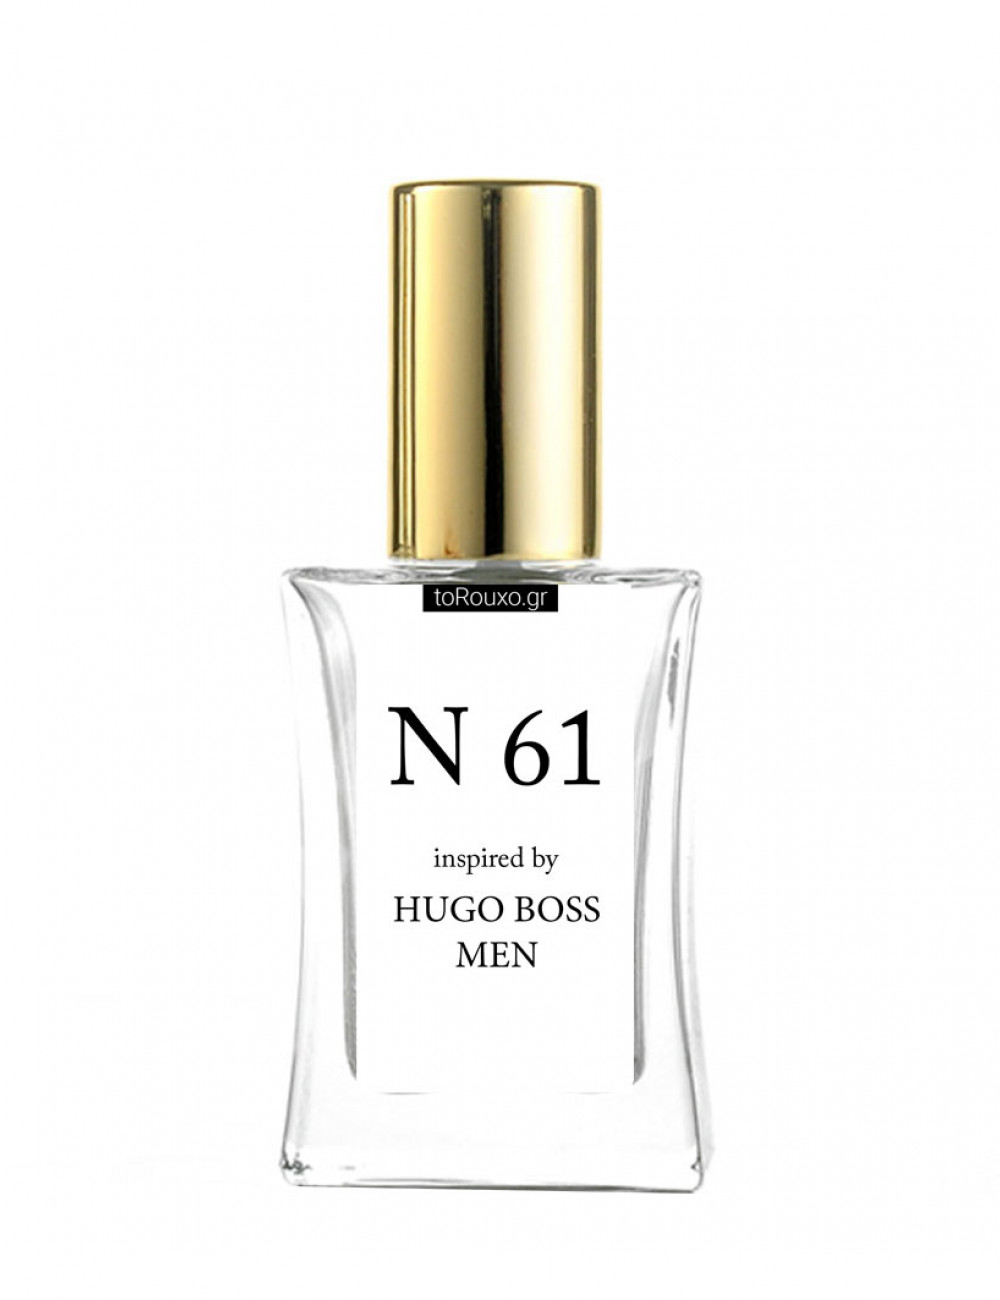 N61 εμπνευσμένο από HUGO BOSS